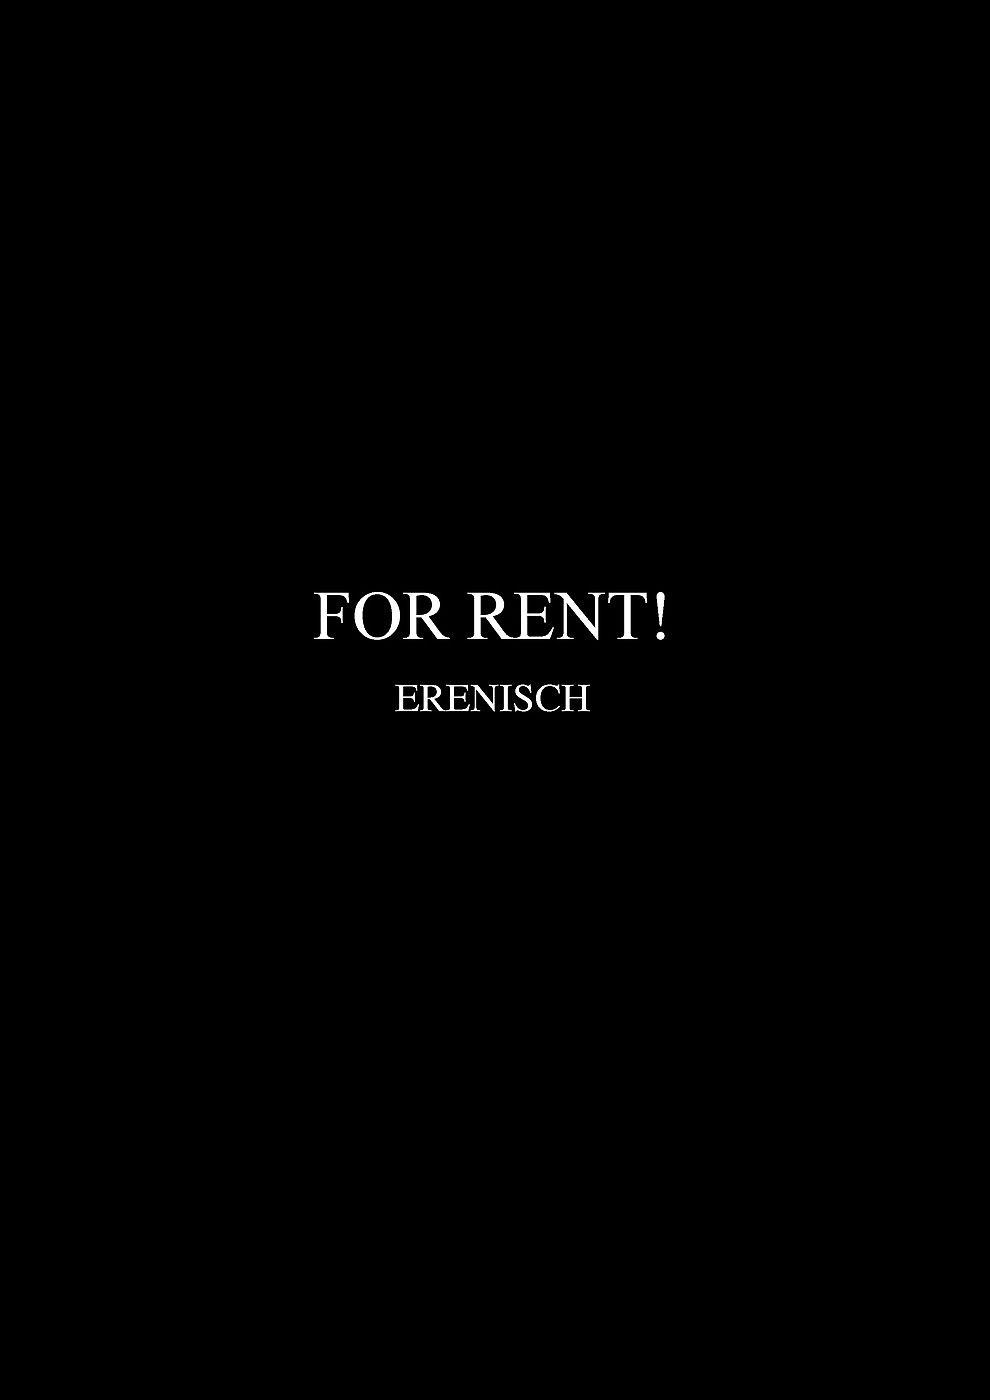 Erenisch- For Rent page 1